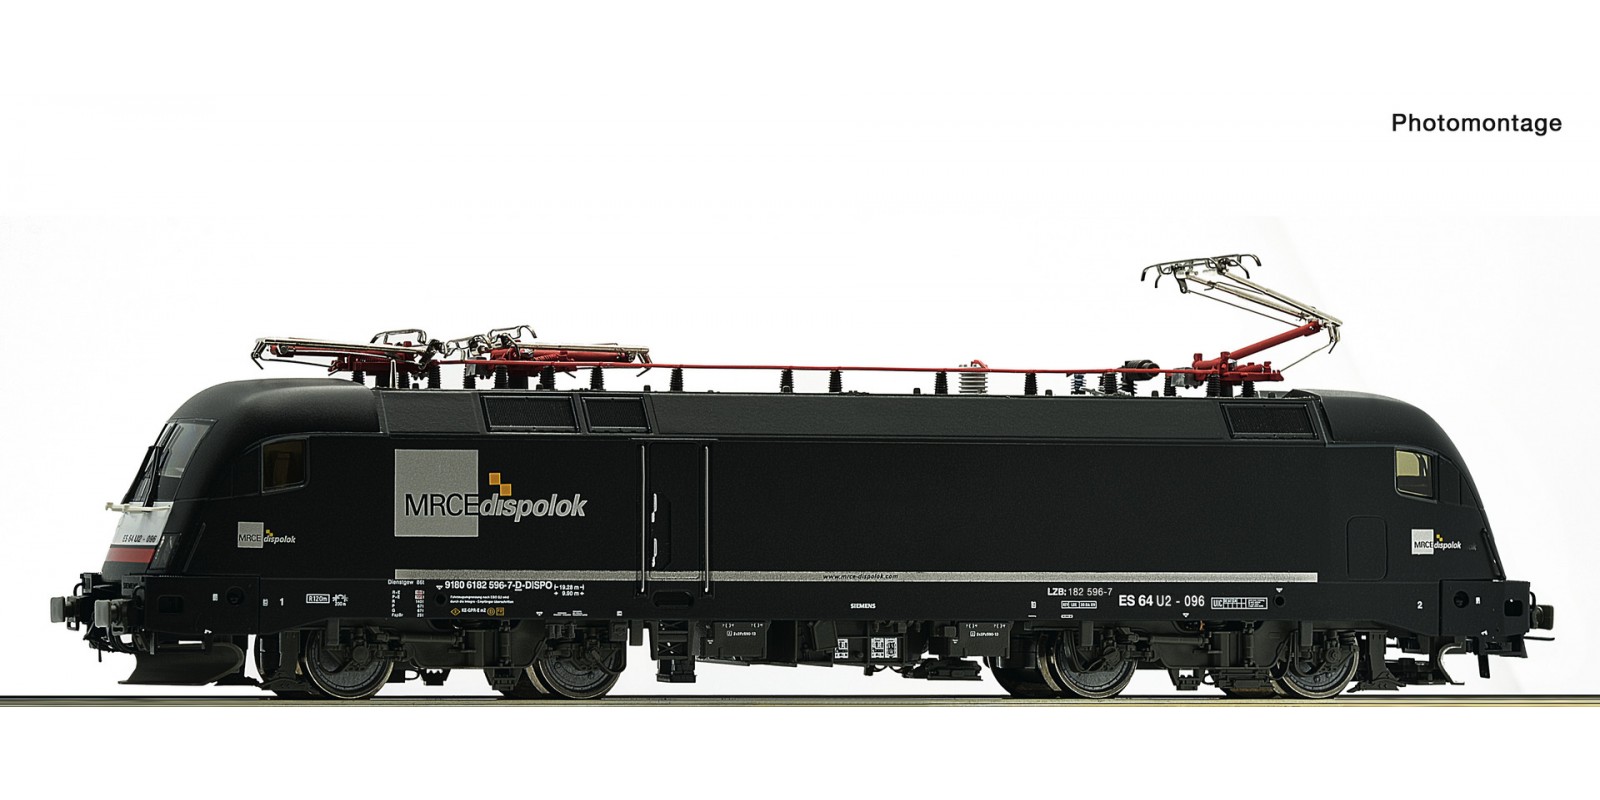 RO70519 Electric locomotive 182 596-7, MRCE